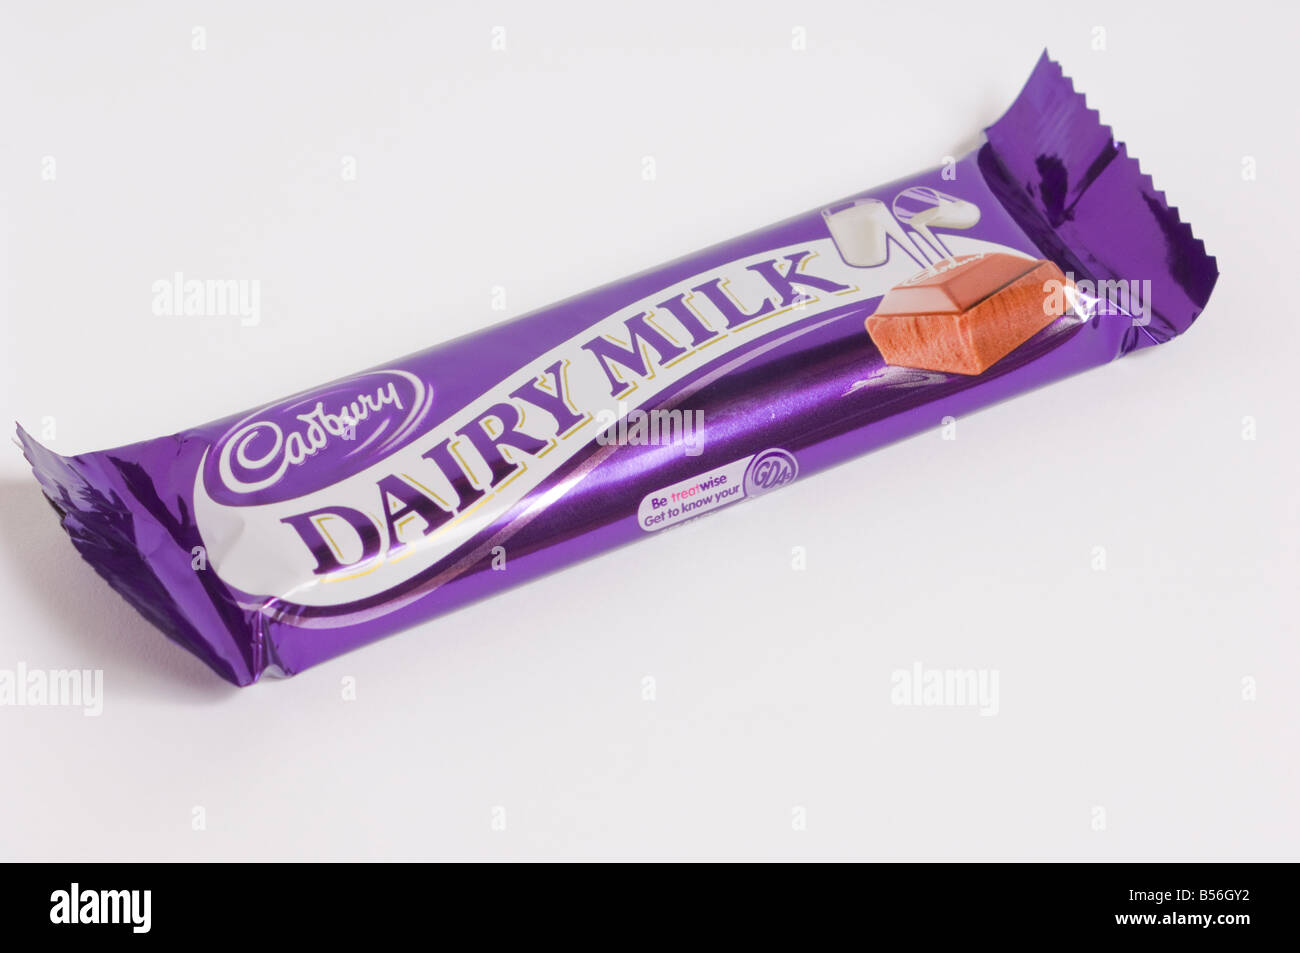 Cadburys Dairy Milk Chocolate bar on white background Stock Photo